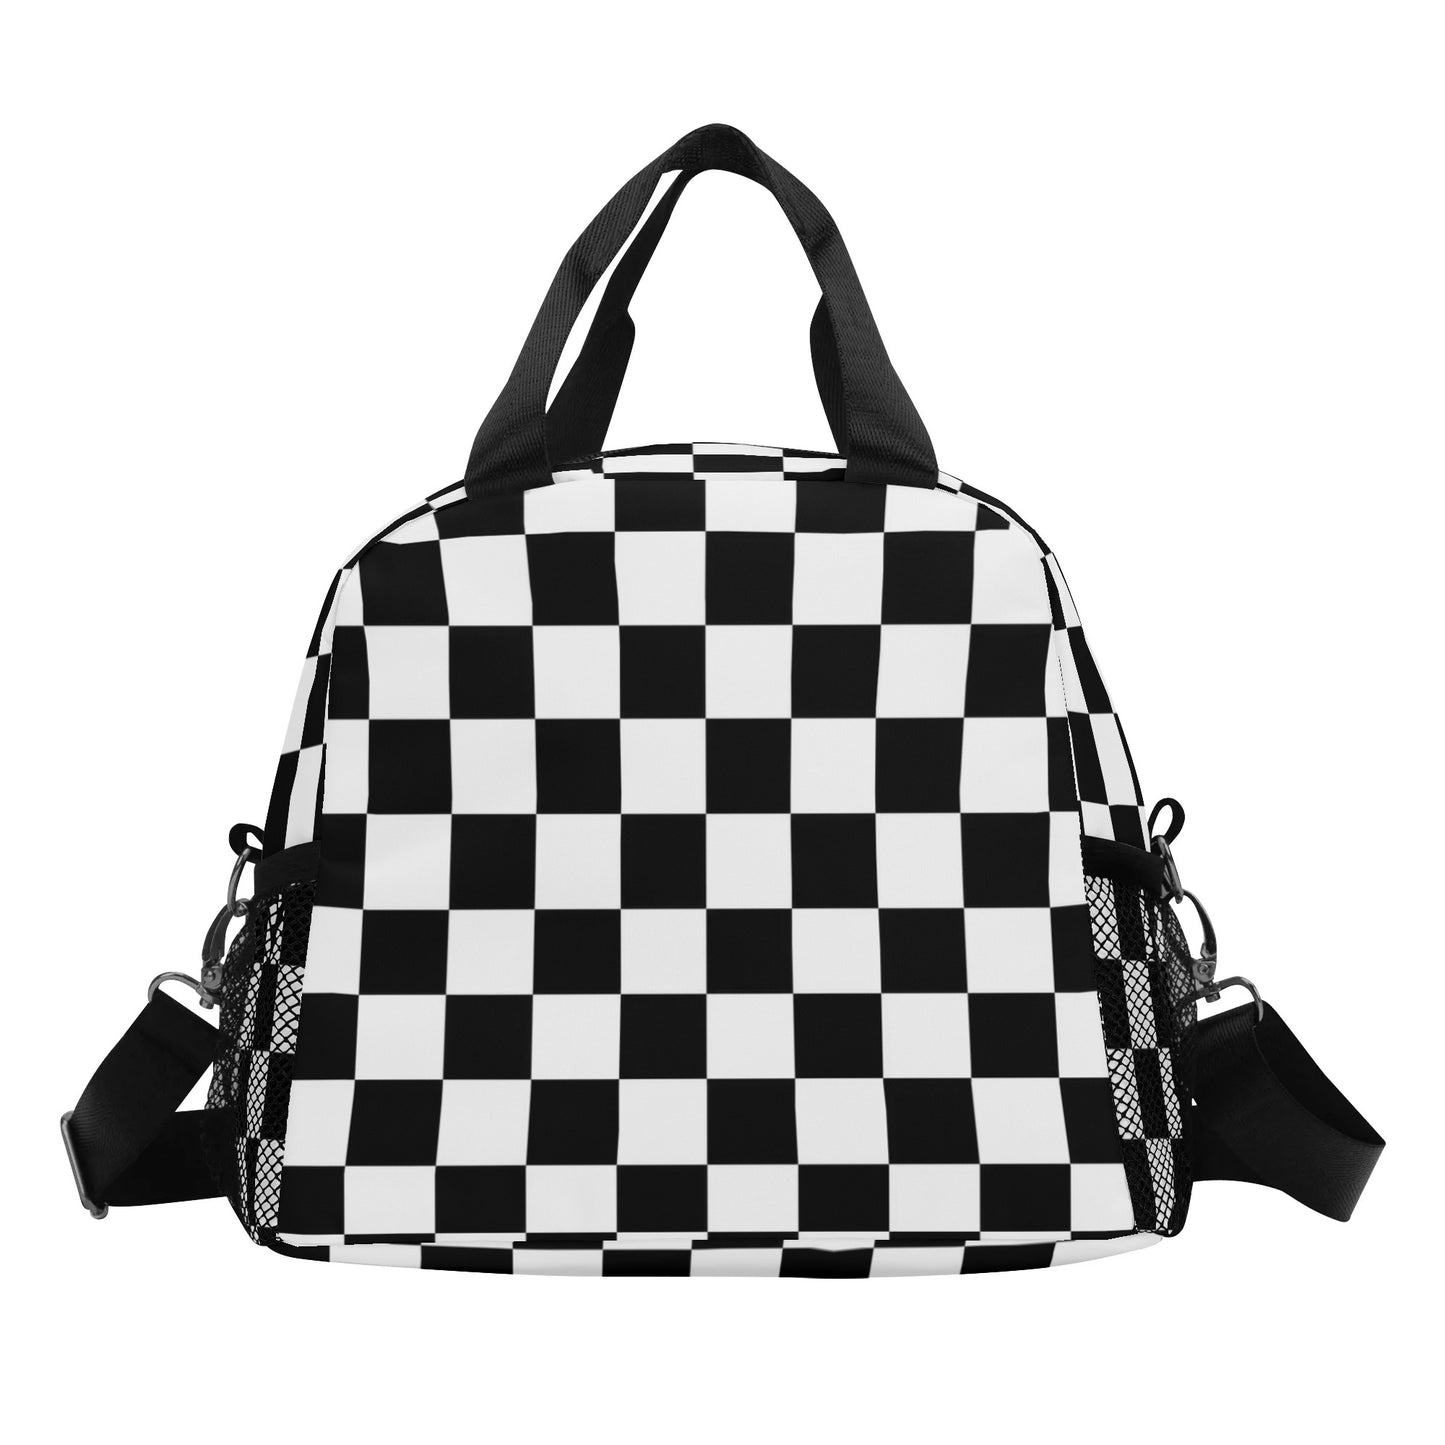 Checkered Lunch Box Bag, Black White Check Cute Food Container Adult Kids Women Ladies Teens Male Men School Work Handbag